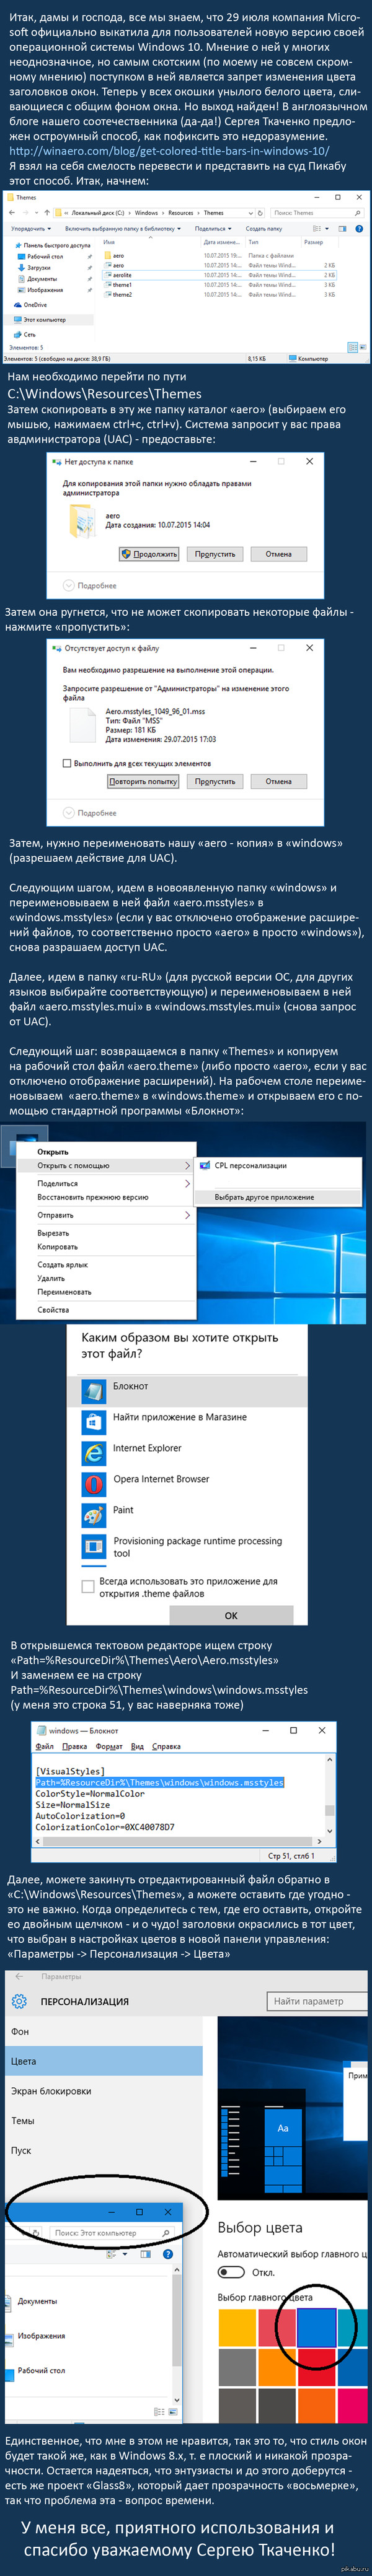         Windows 10  : http://winaero.com/blog/get-colored-title-bars-in-windows-10/